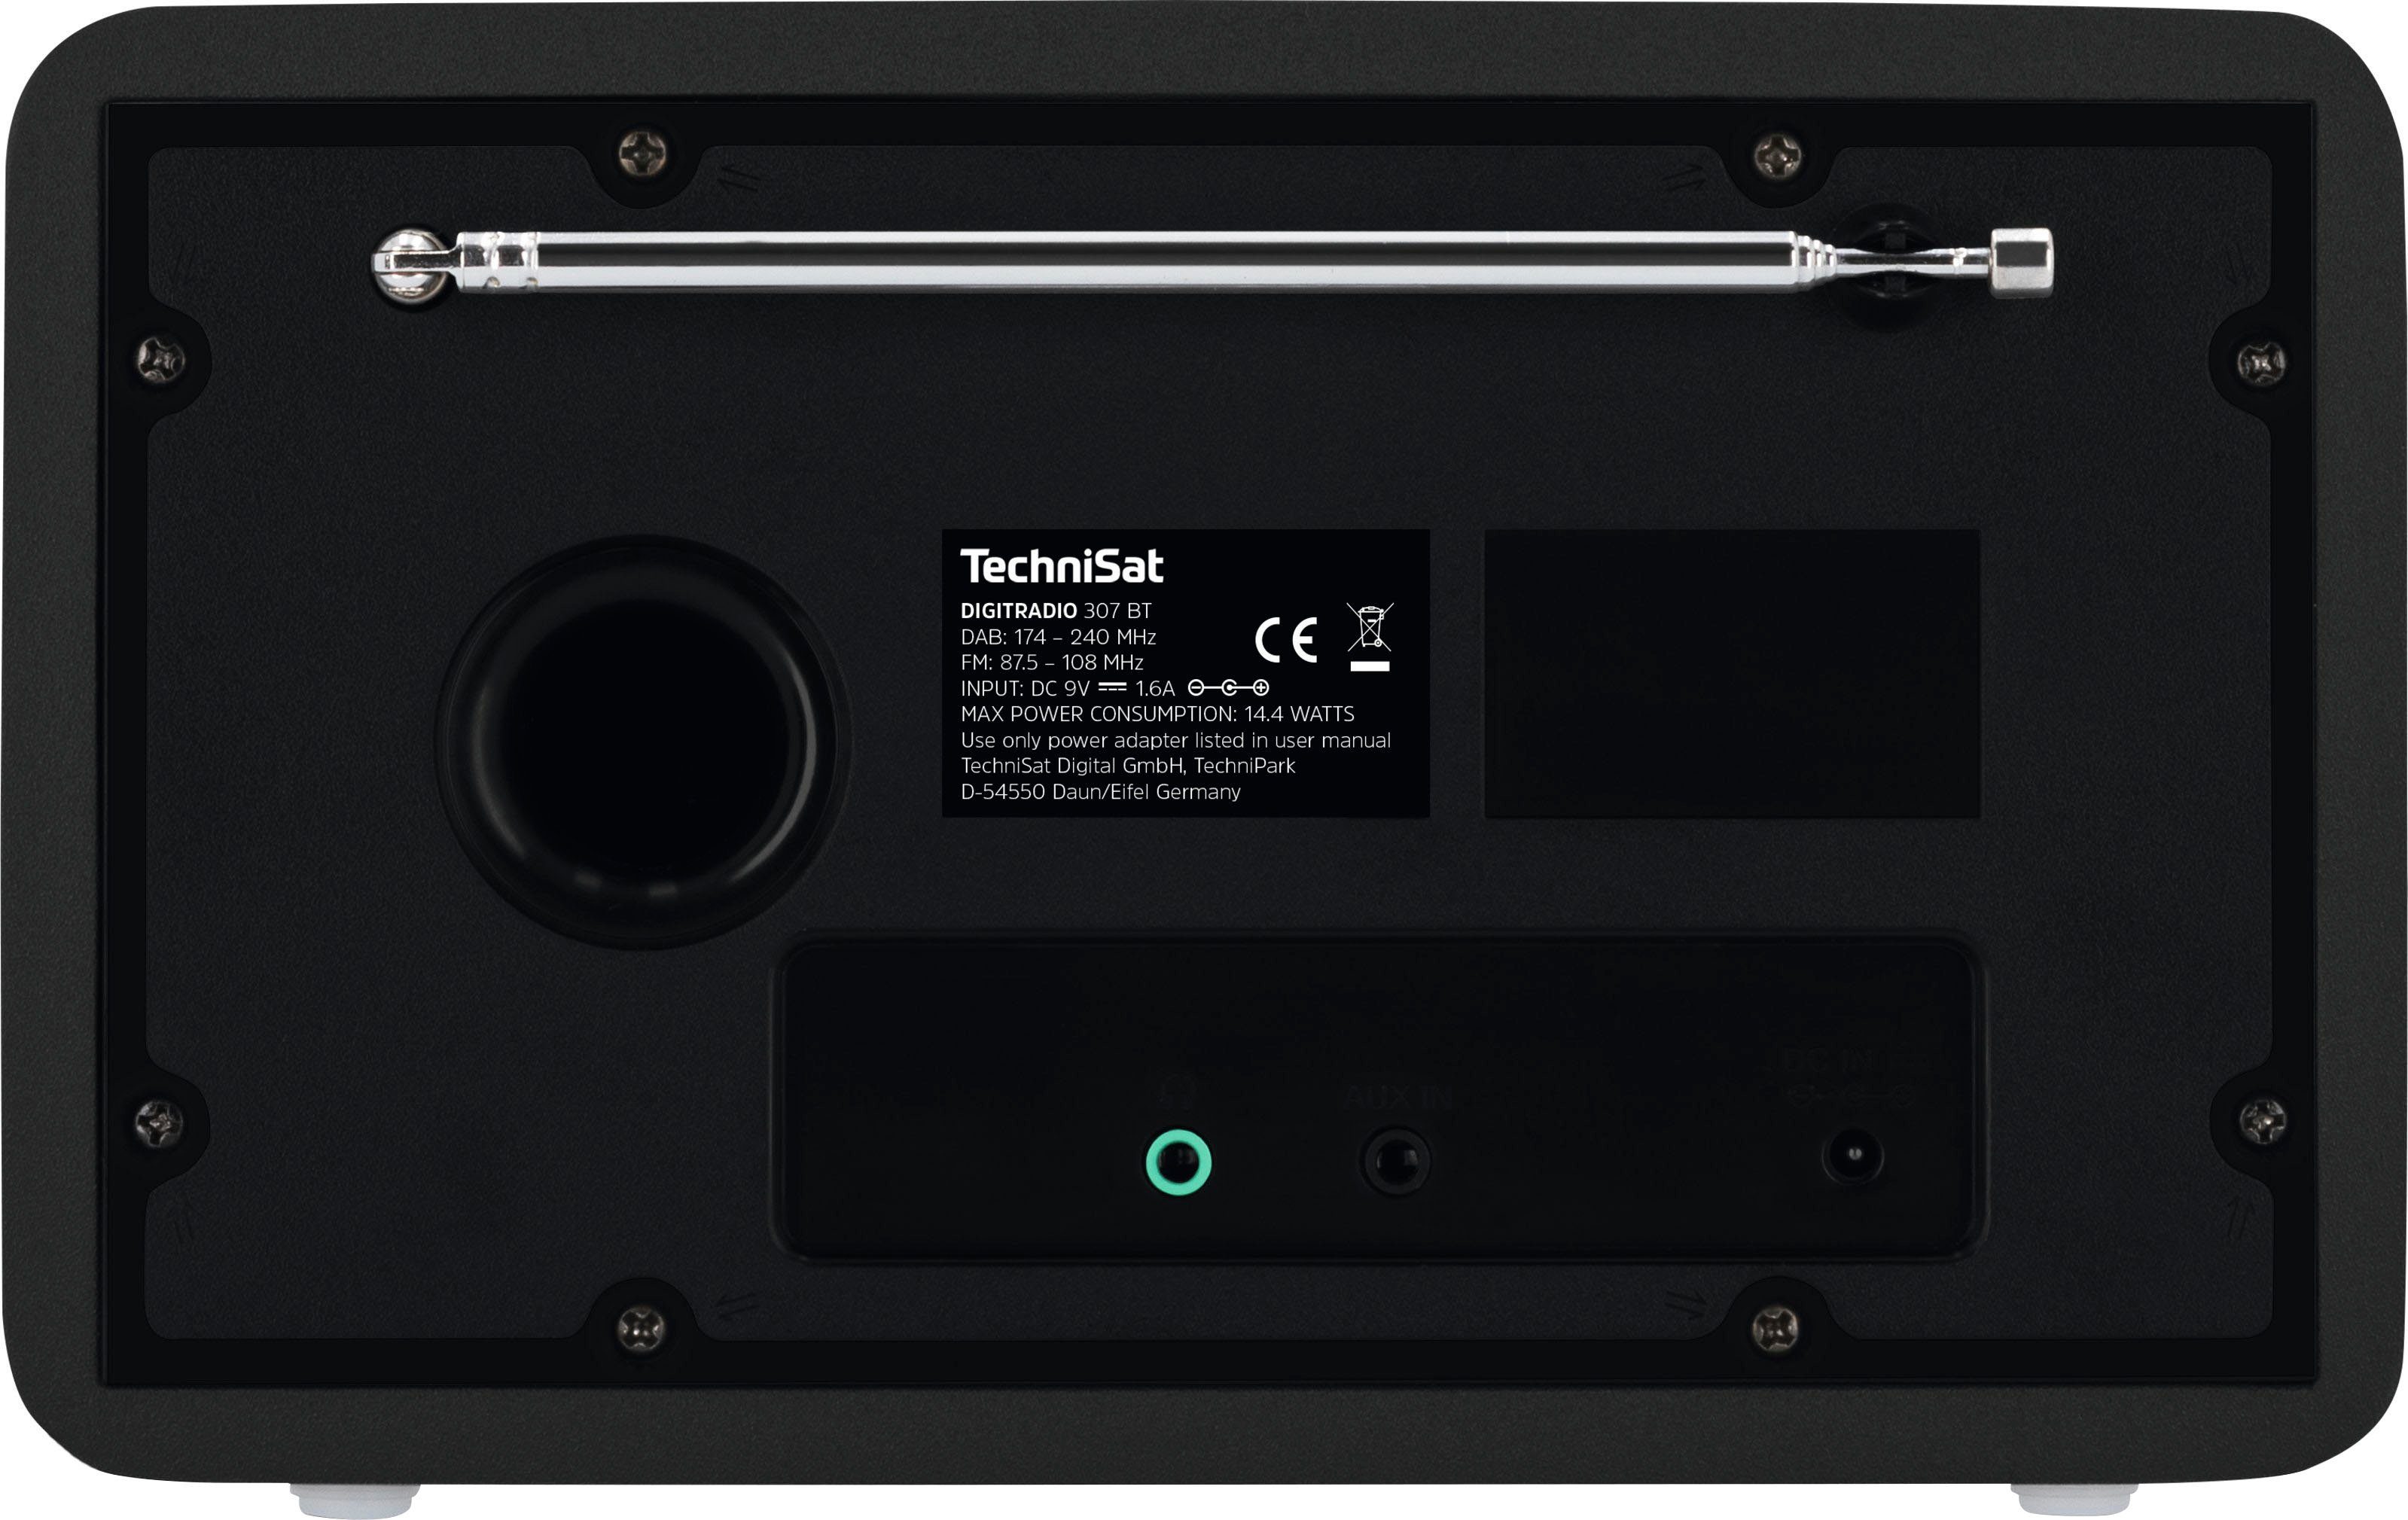 UKW schwarz mit 5 307 TechniSat (Digitalradio W) BT DIGITRADIO (DAB), RDS, Radio